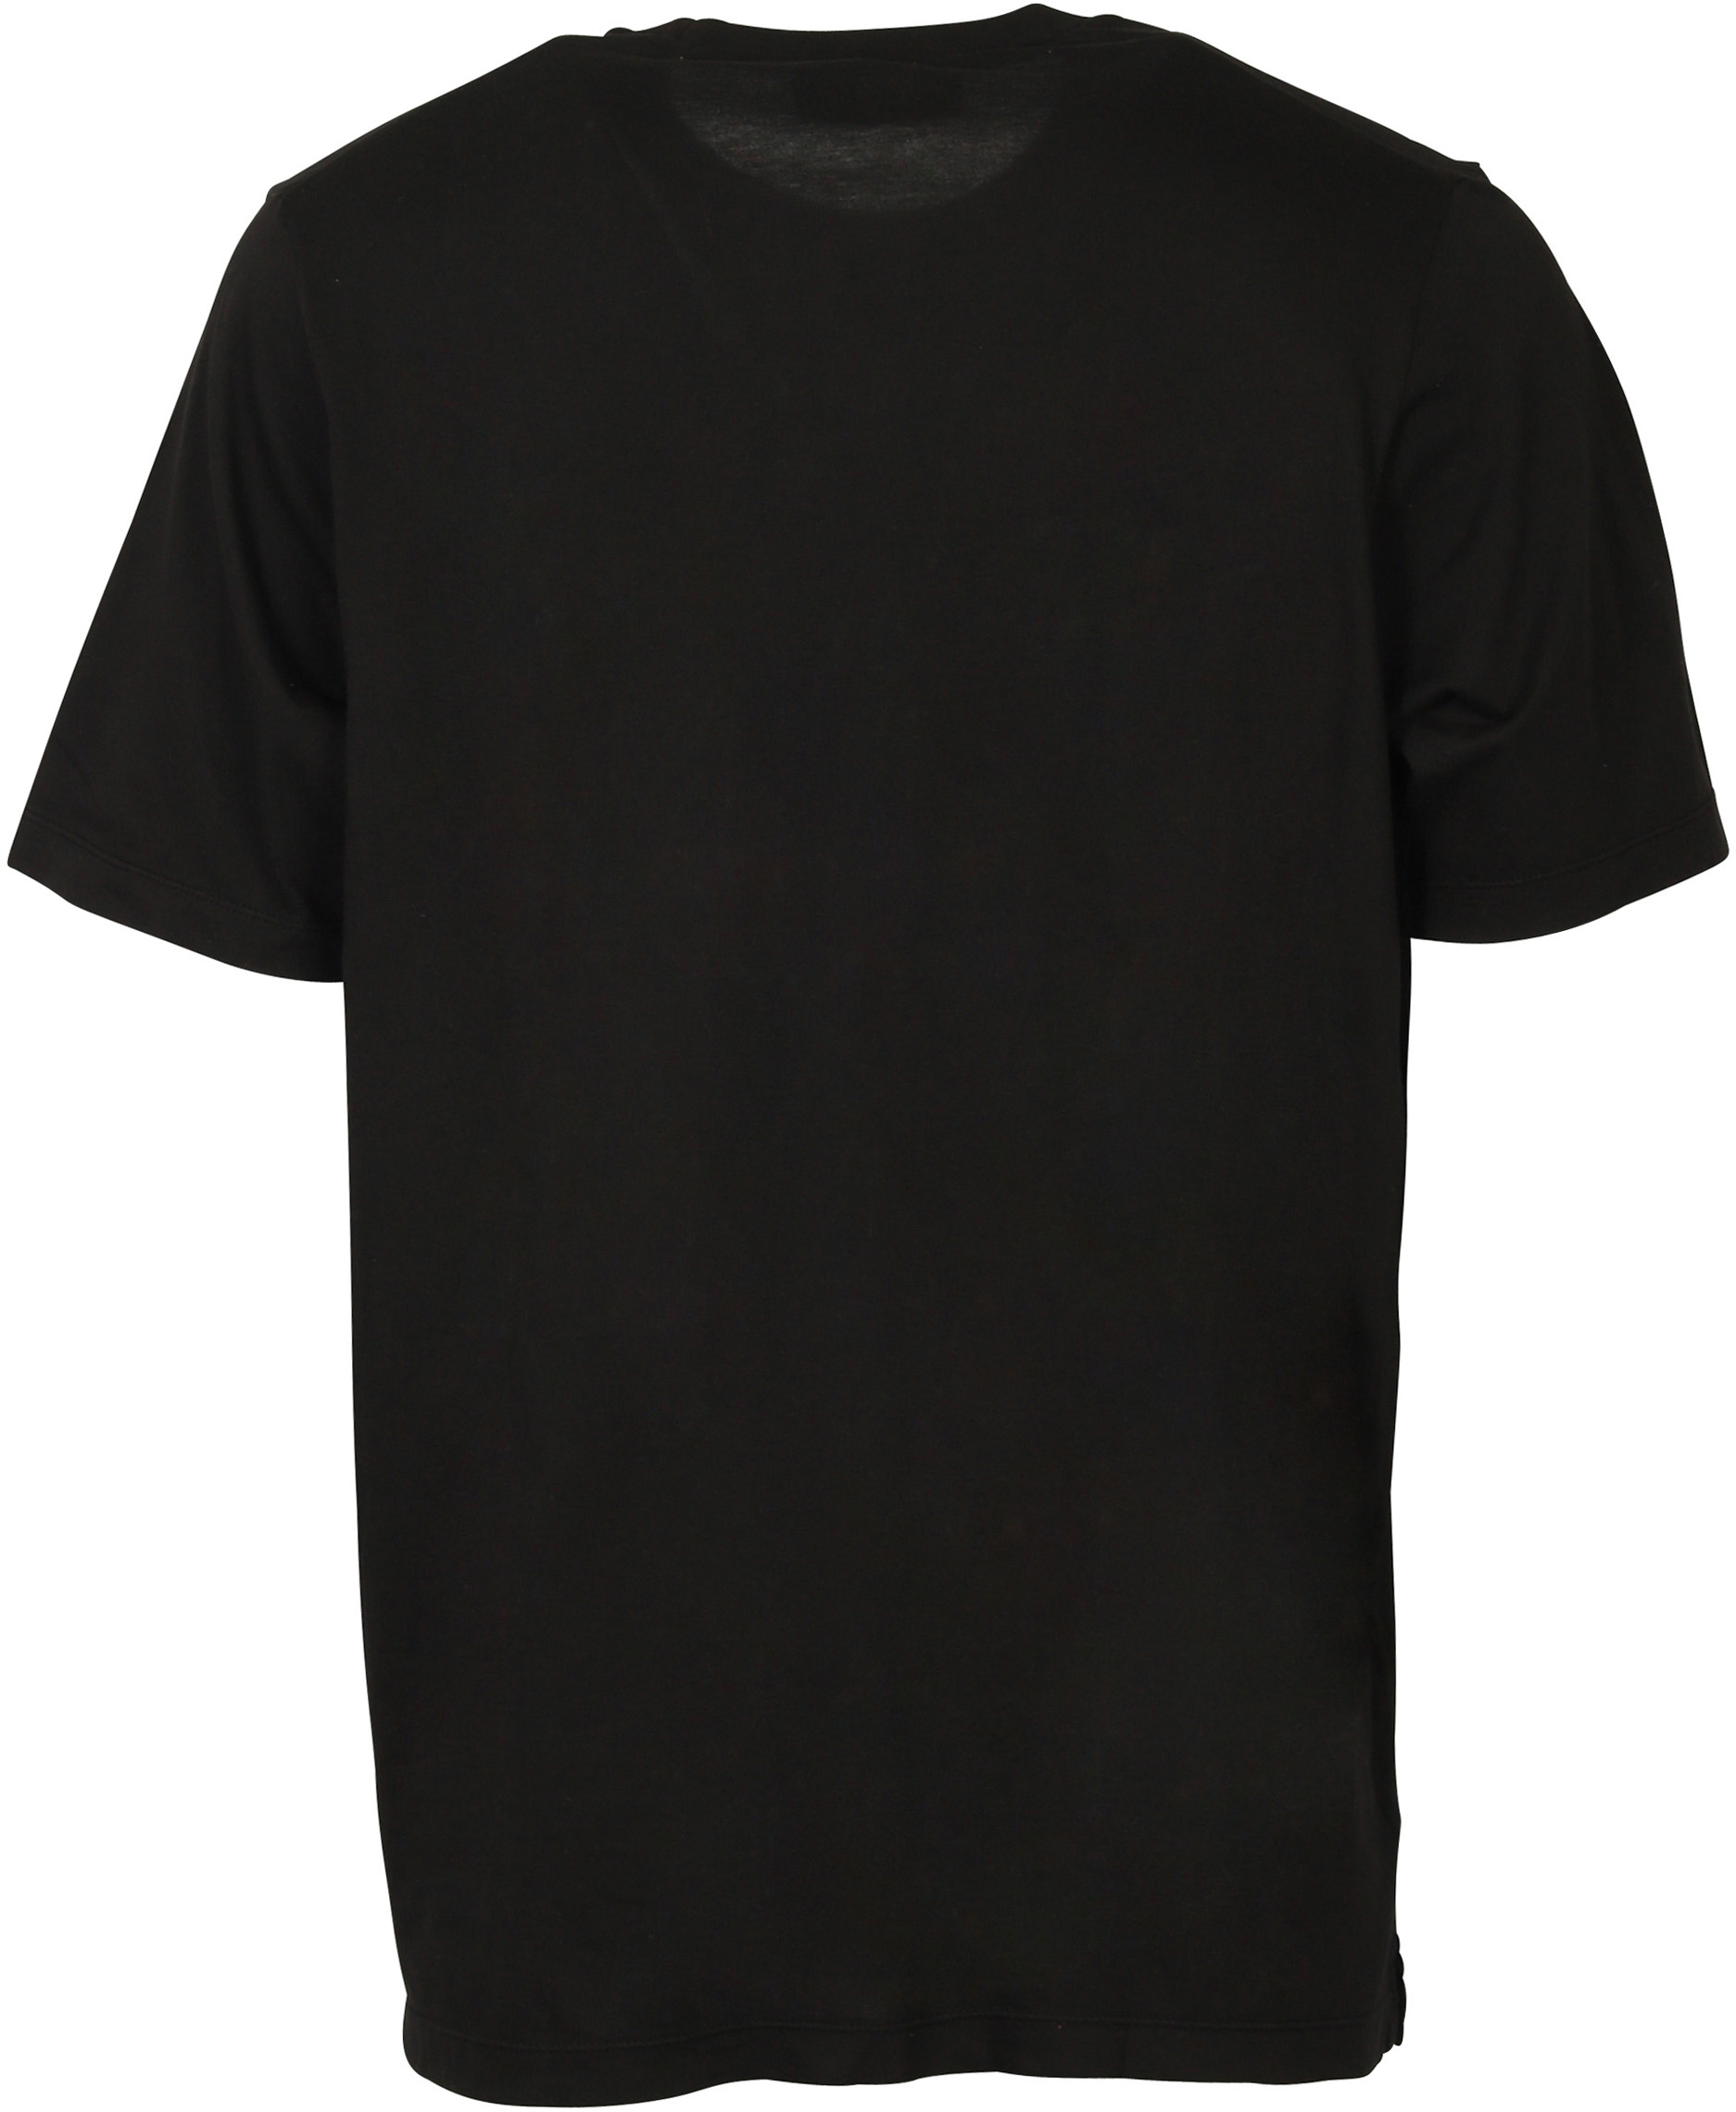 Dsquared T-Shirt Black Printed XXL